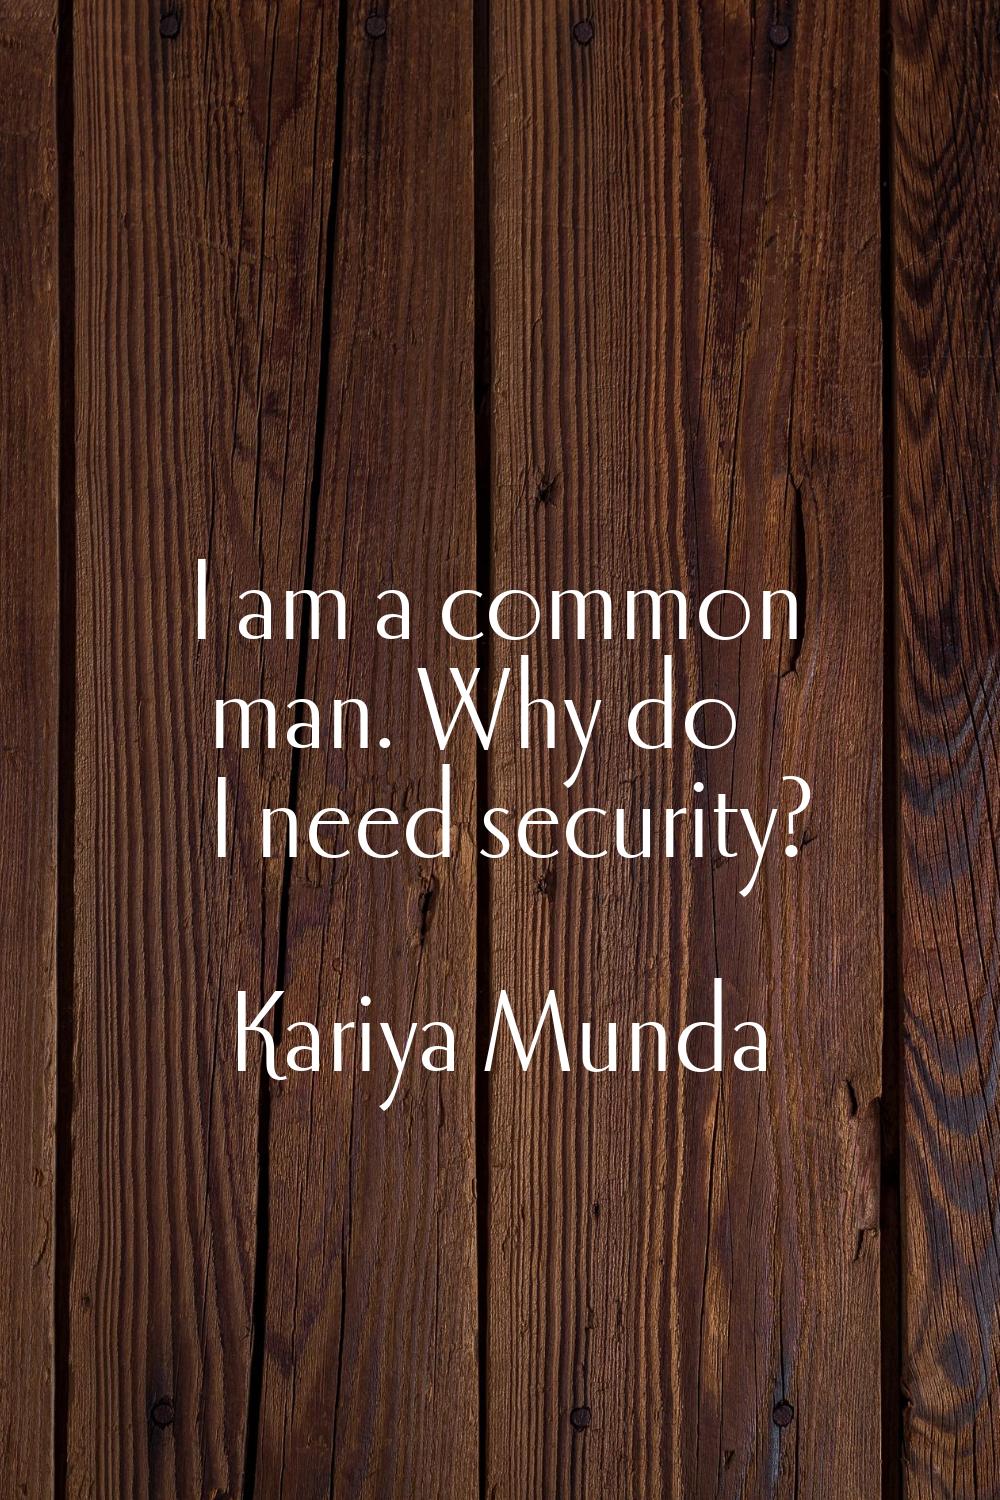 I am a common man. Why do I need security?